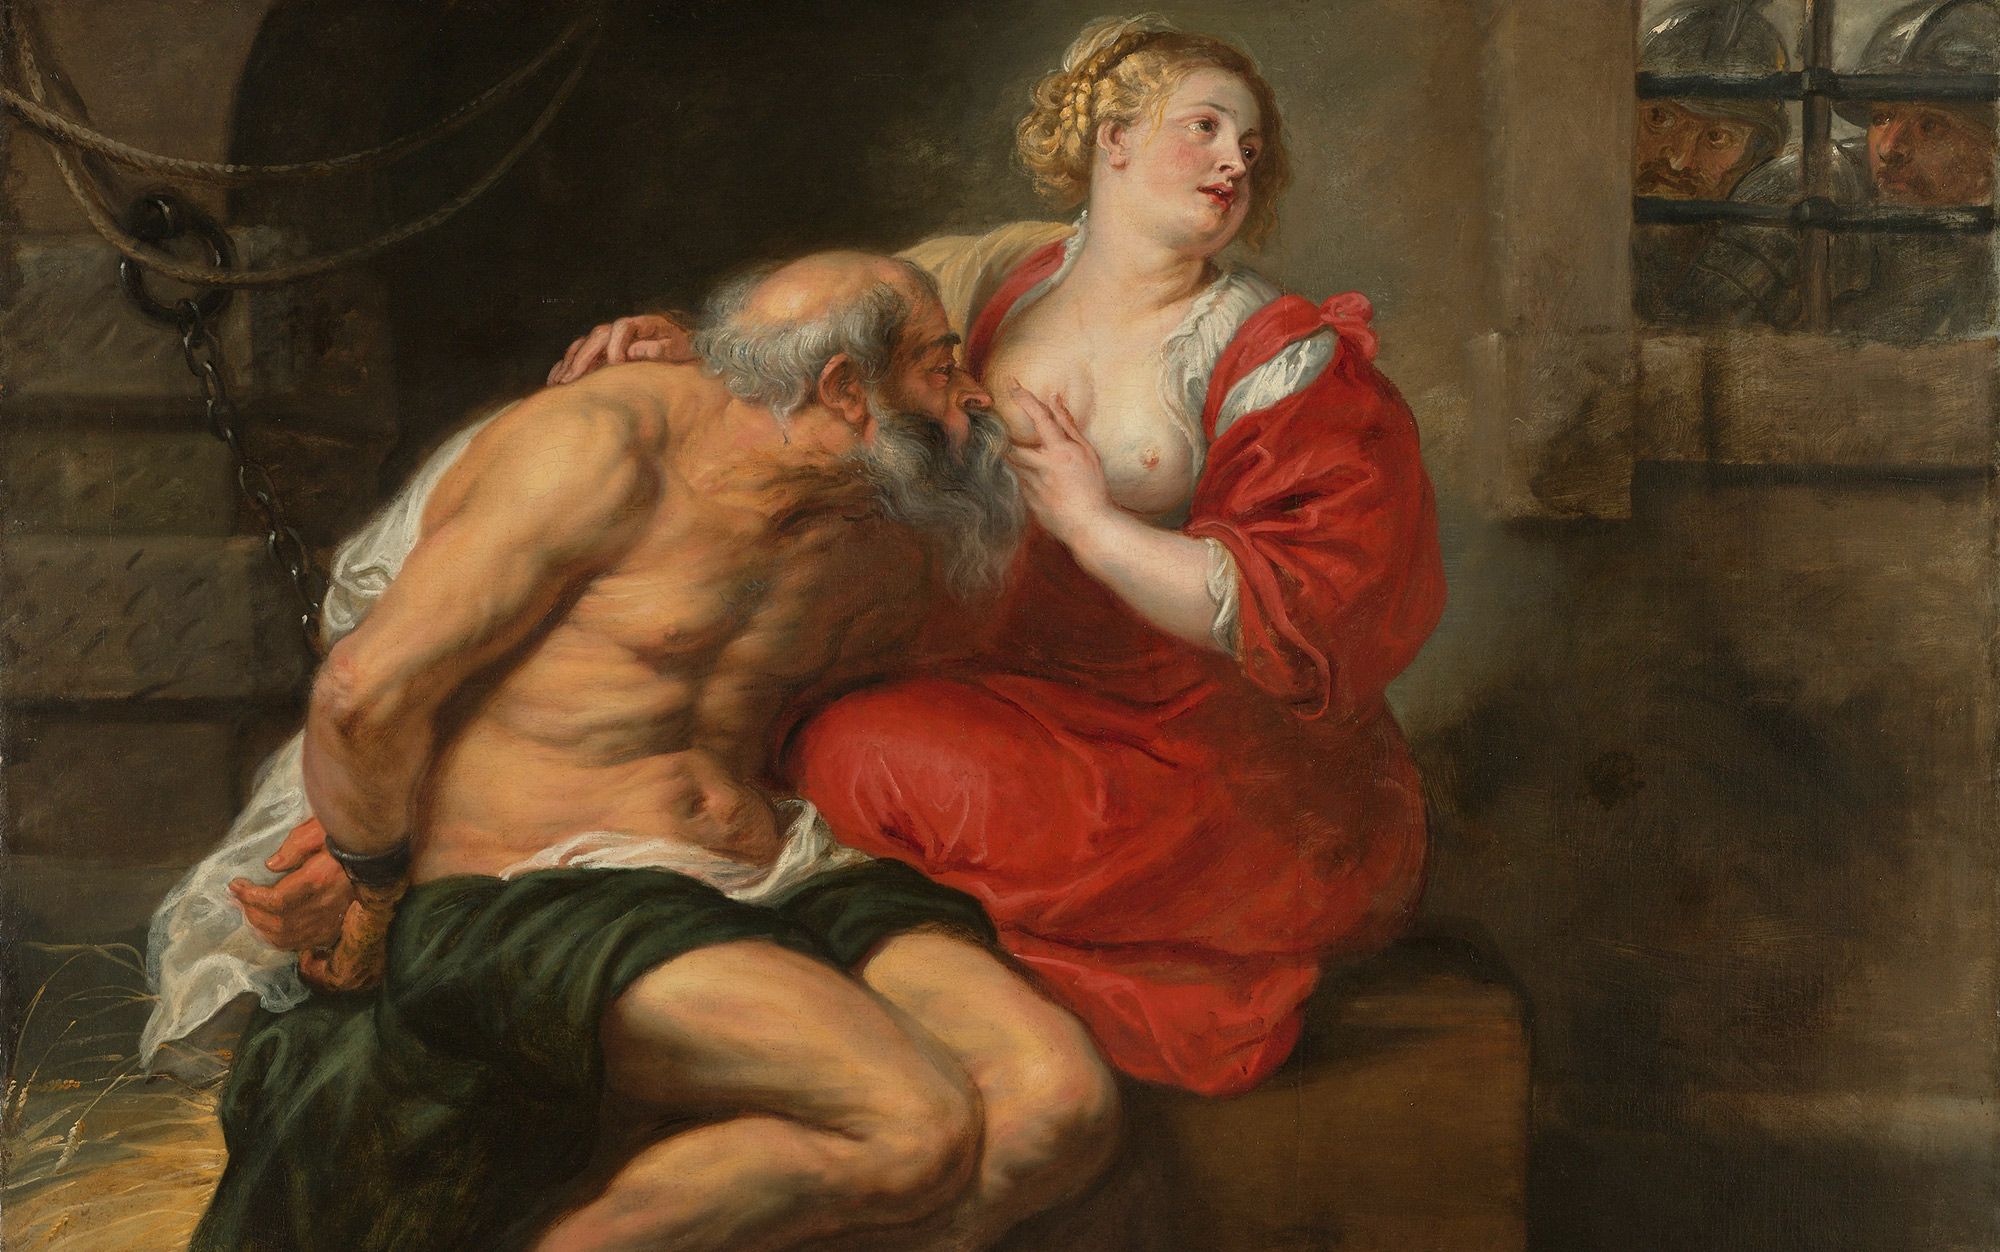 Rape Boob Kiss - On Roman Charity, or a woman's filial debt to the patriarchy | Aeon Essays